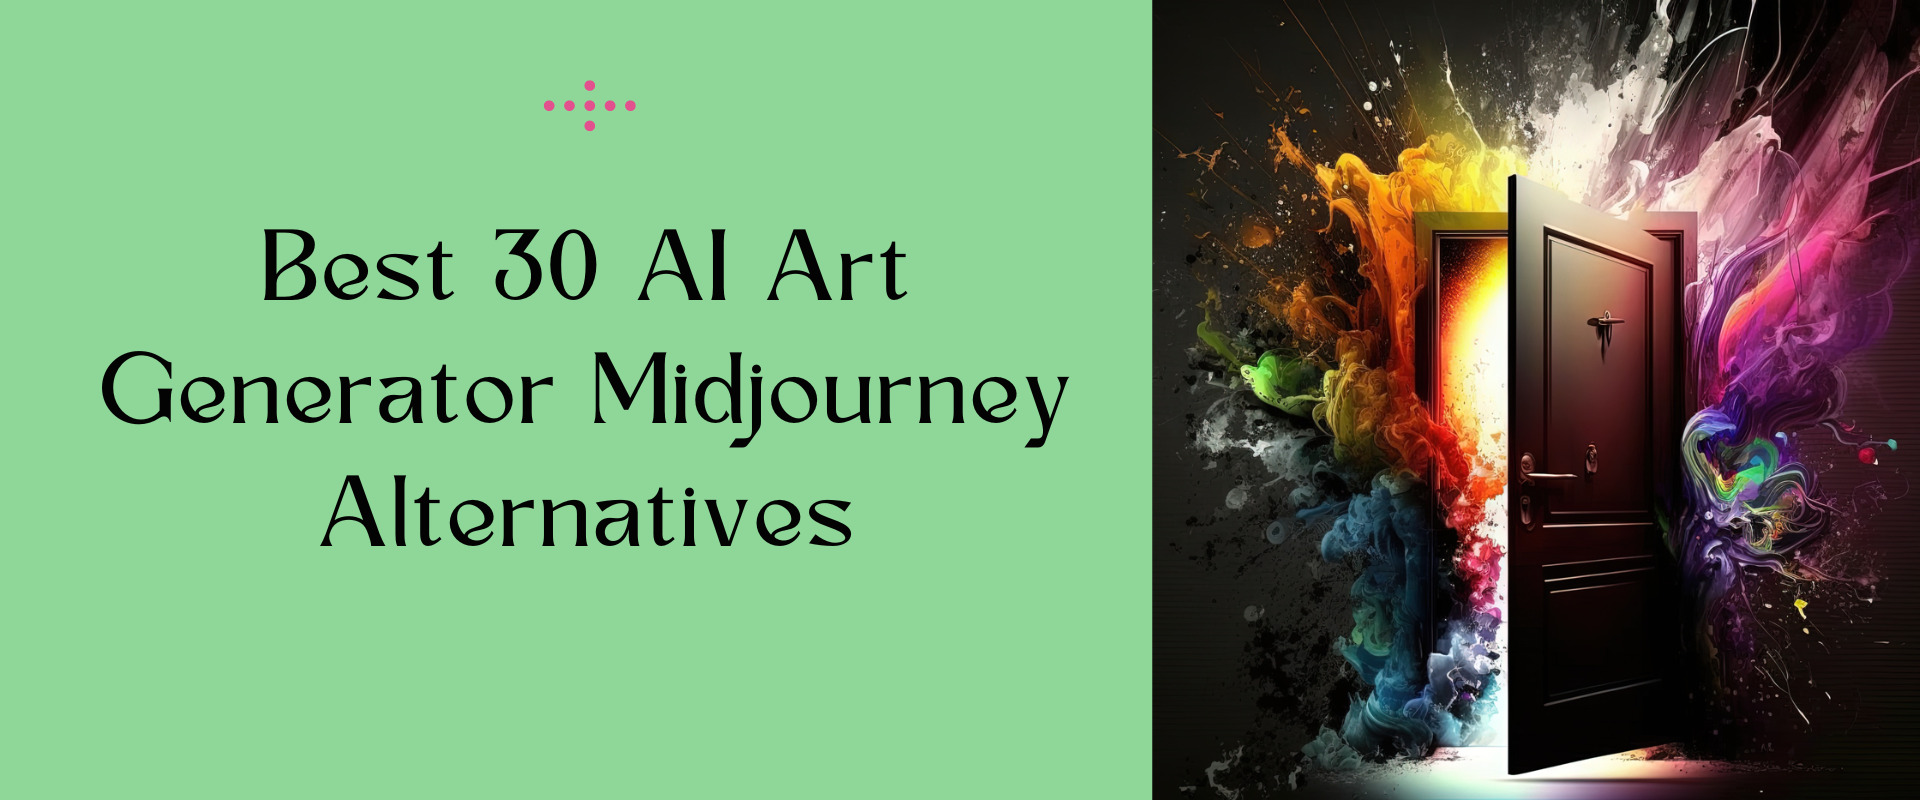 Best 30 AI Art Generator Midjourney Alternatives